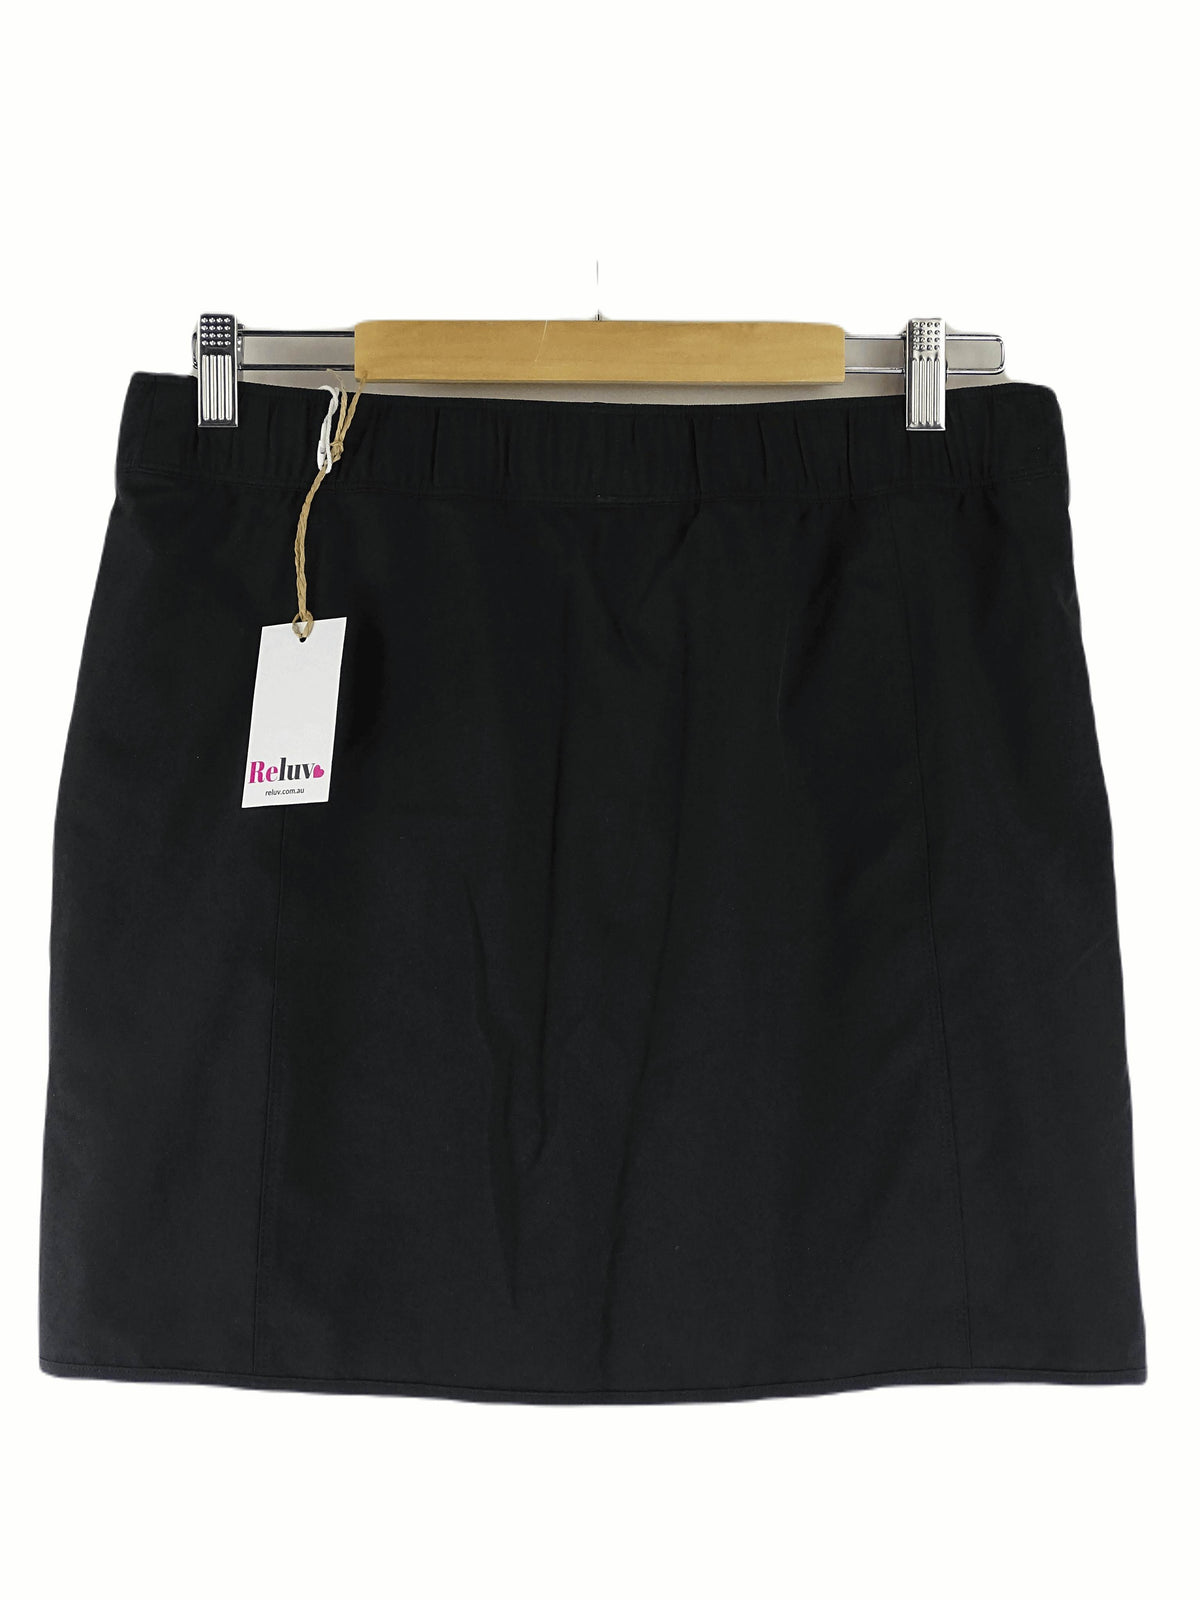 Patagonia Black Skirt M